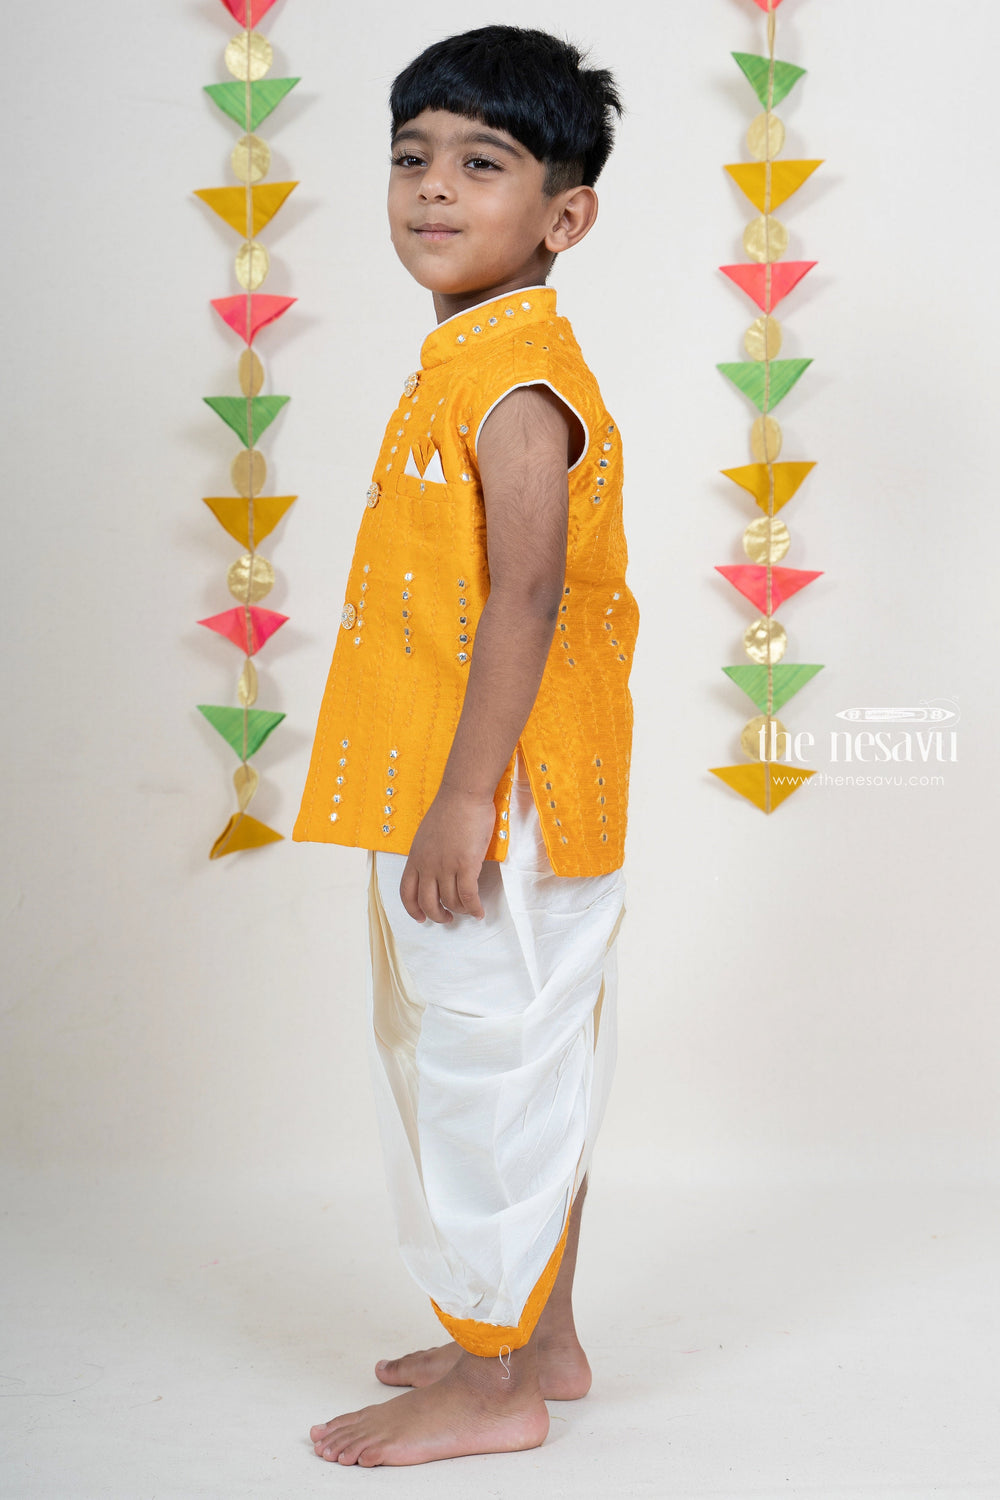 The Nesavu Ethnic Sets Mustard Designer Party Wear Kurta Suit For New Born Baby Boys psr silks Nesavu